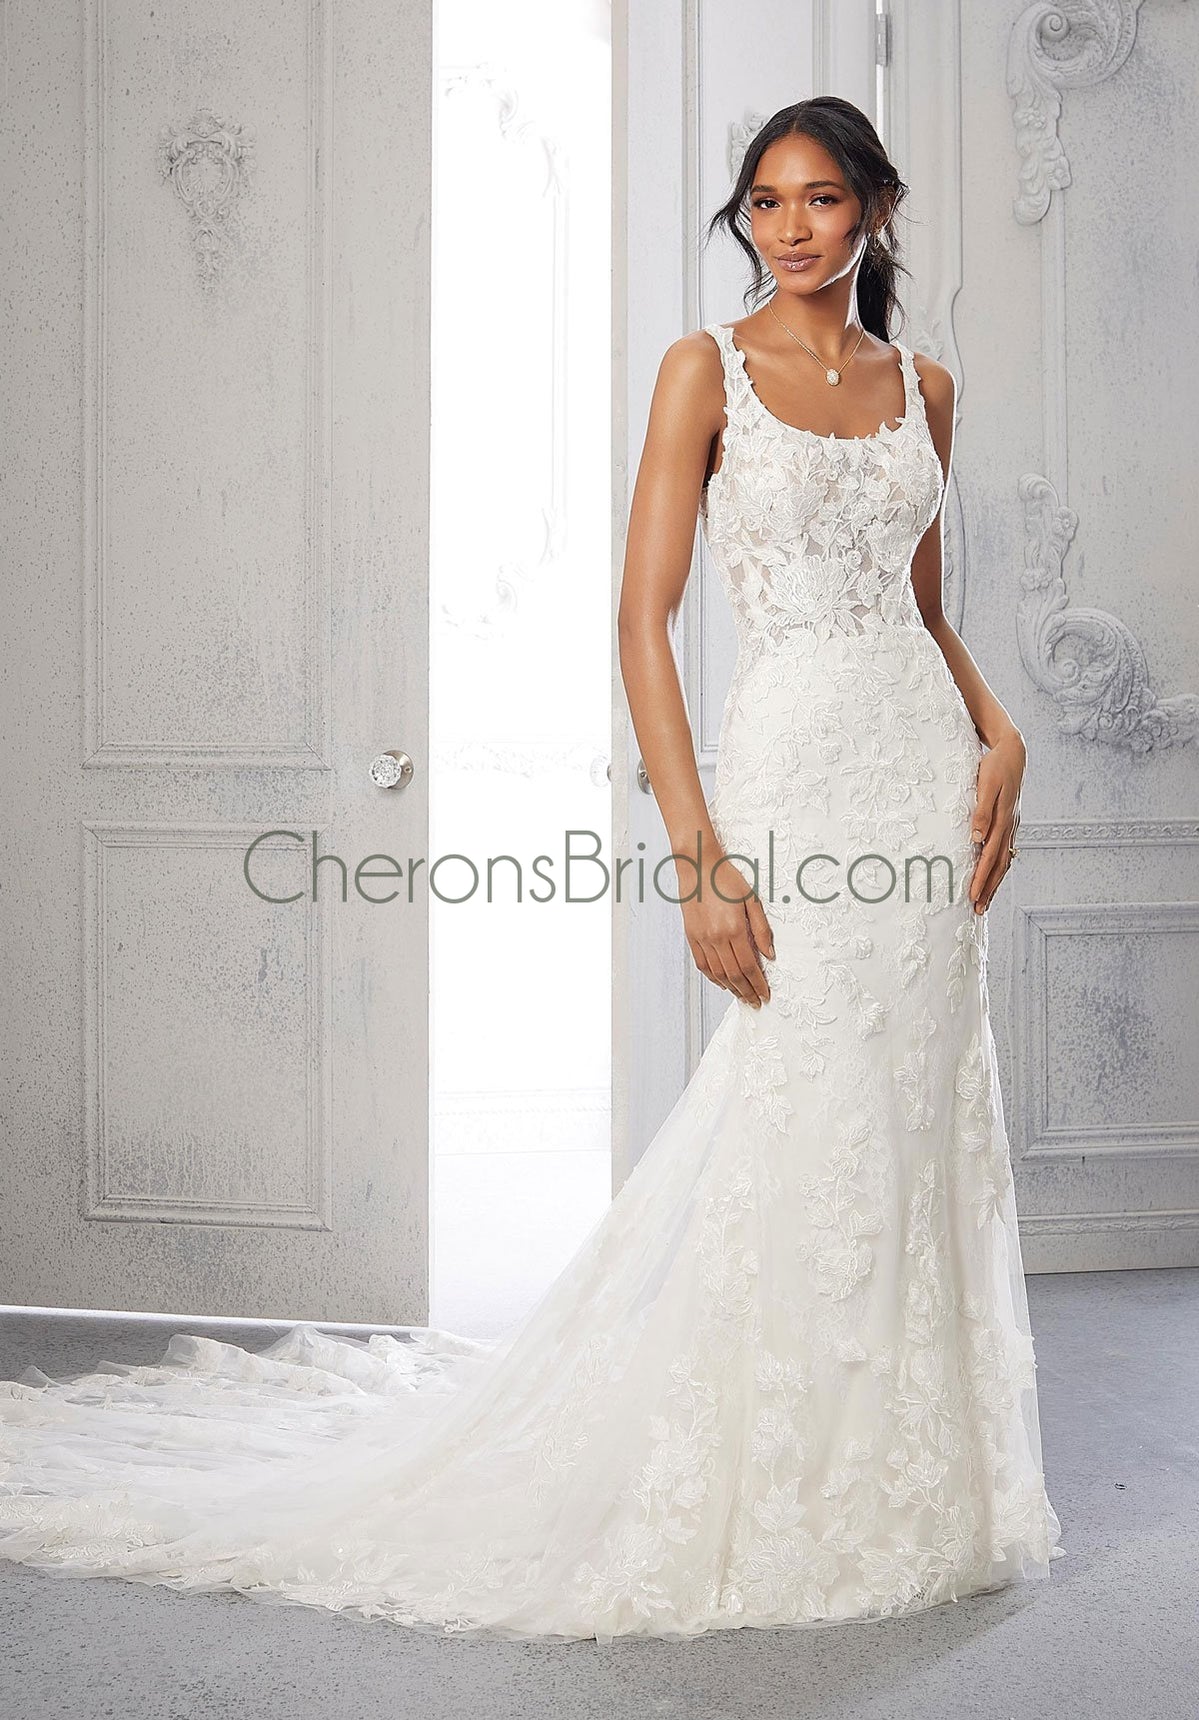 Morilee - 2369 - Carine - Cheron's Bridal, Wedding Gown - Cheron's